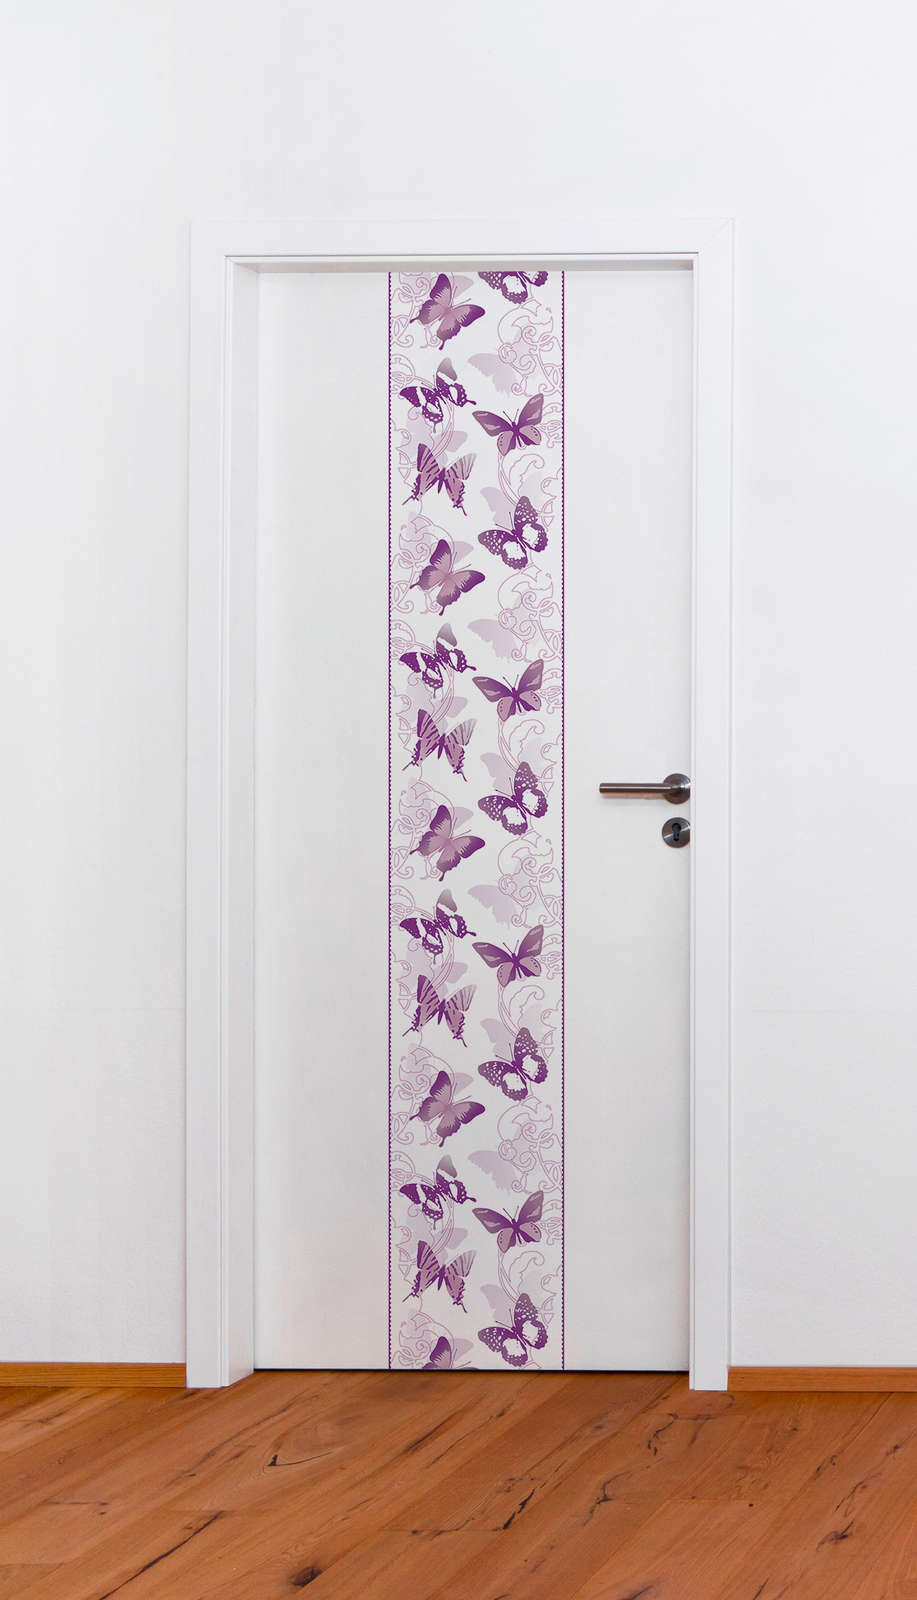             Butterfly wallpaper graphic pattern for girls - purple
        